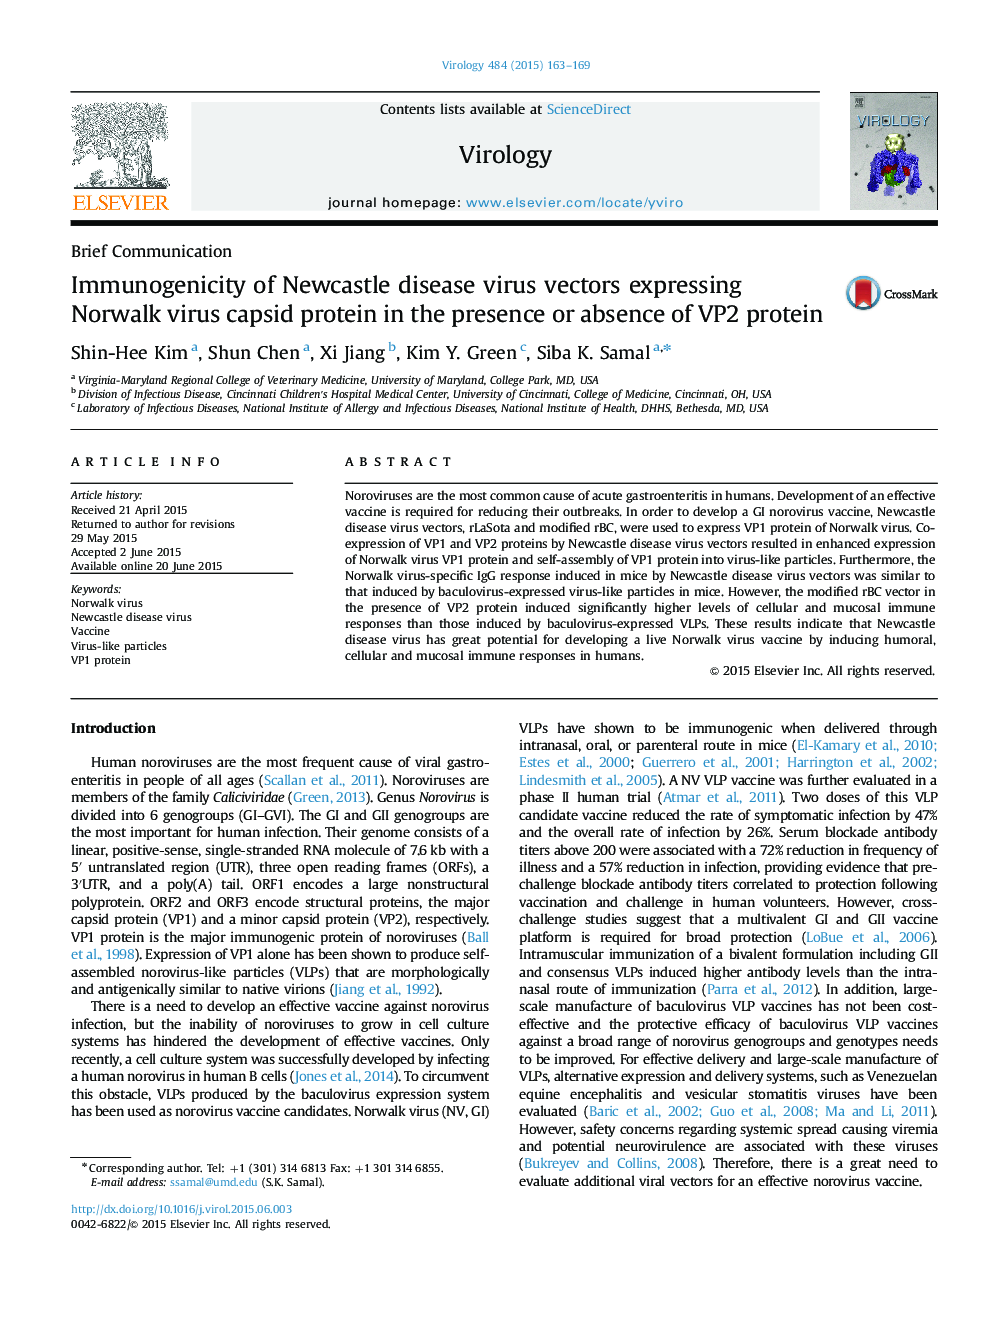 Immunogenicity of Newcastle disease virus vectors expressing Norwalk virus capsid protein in the presence or absence of VP2 protein